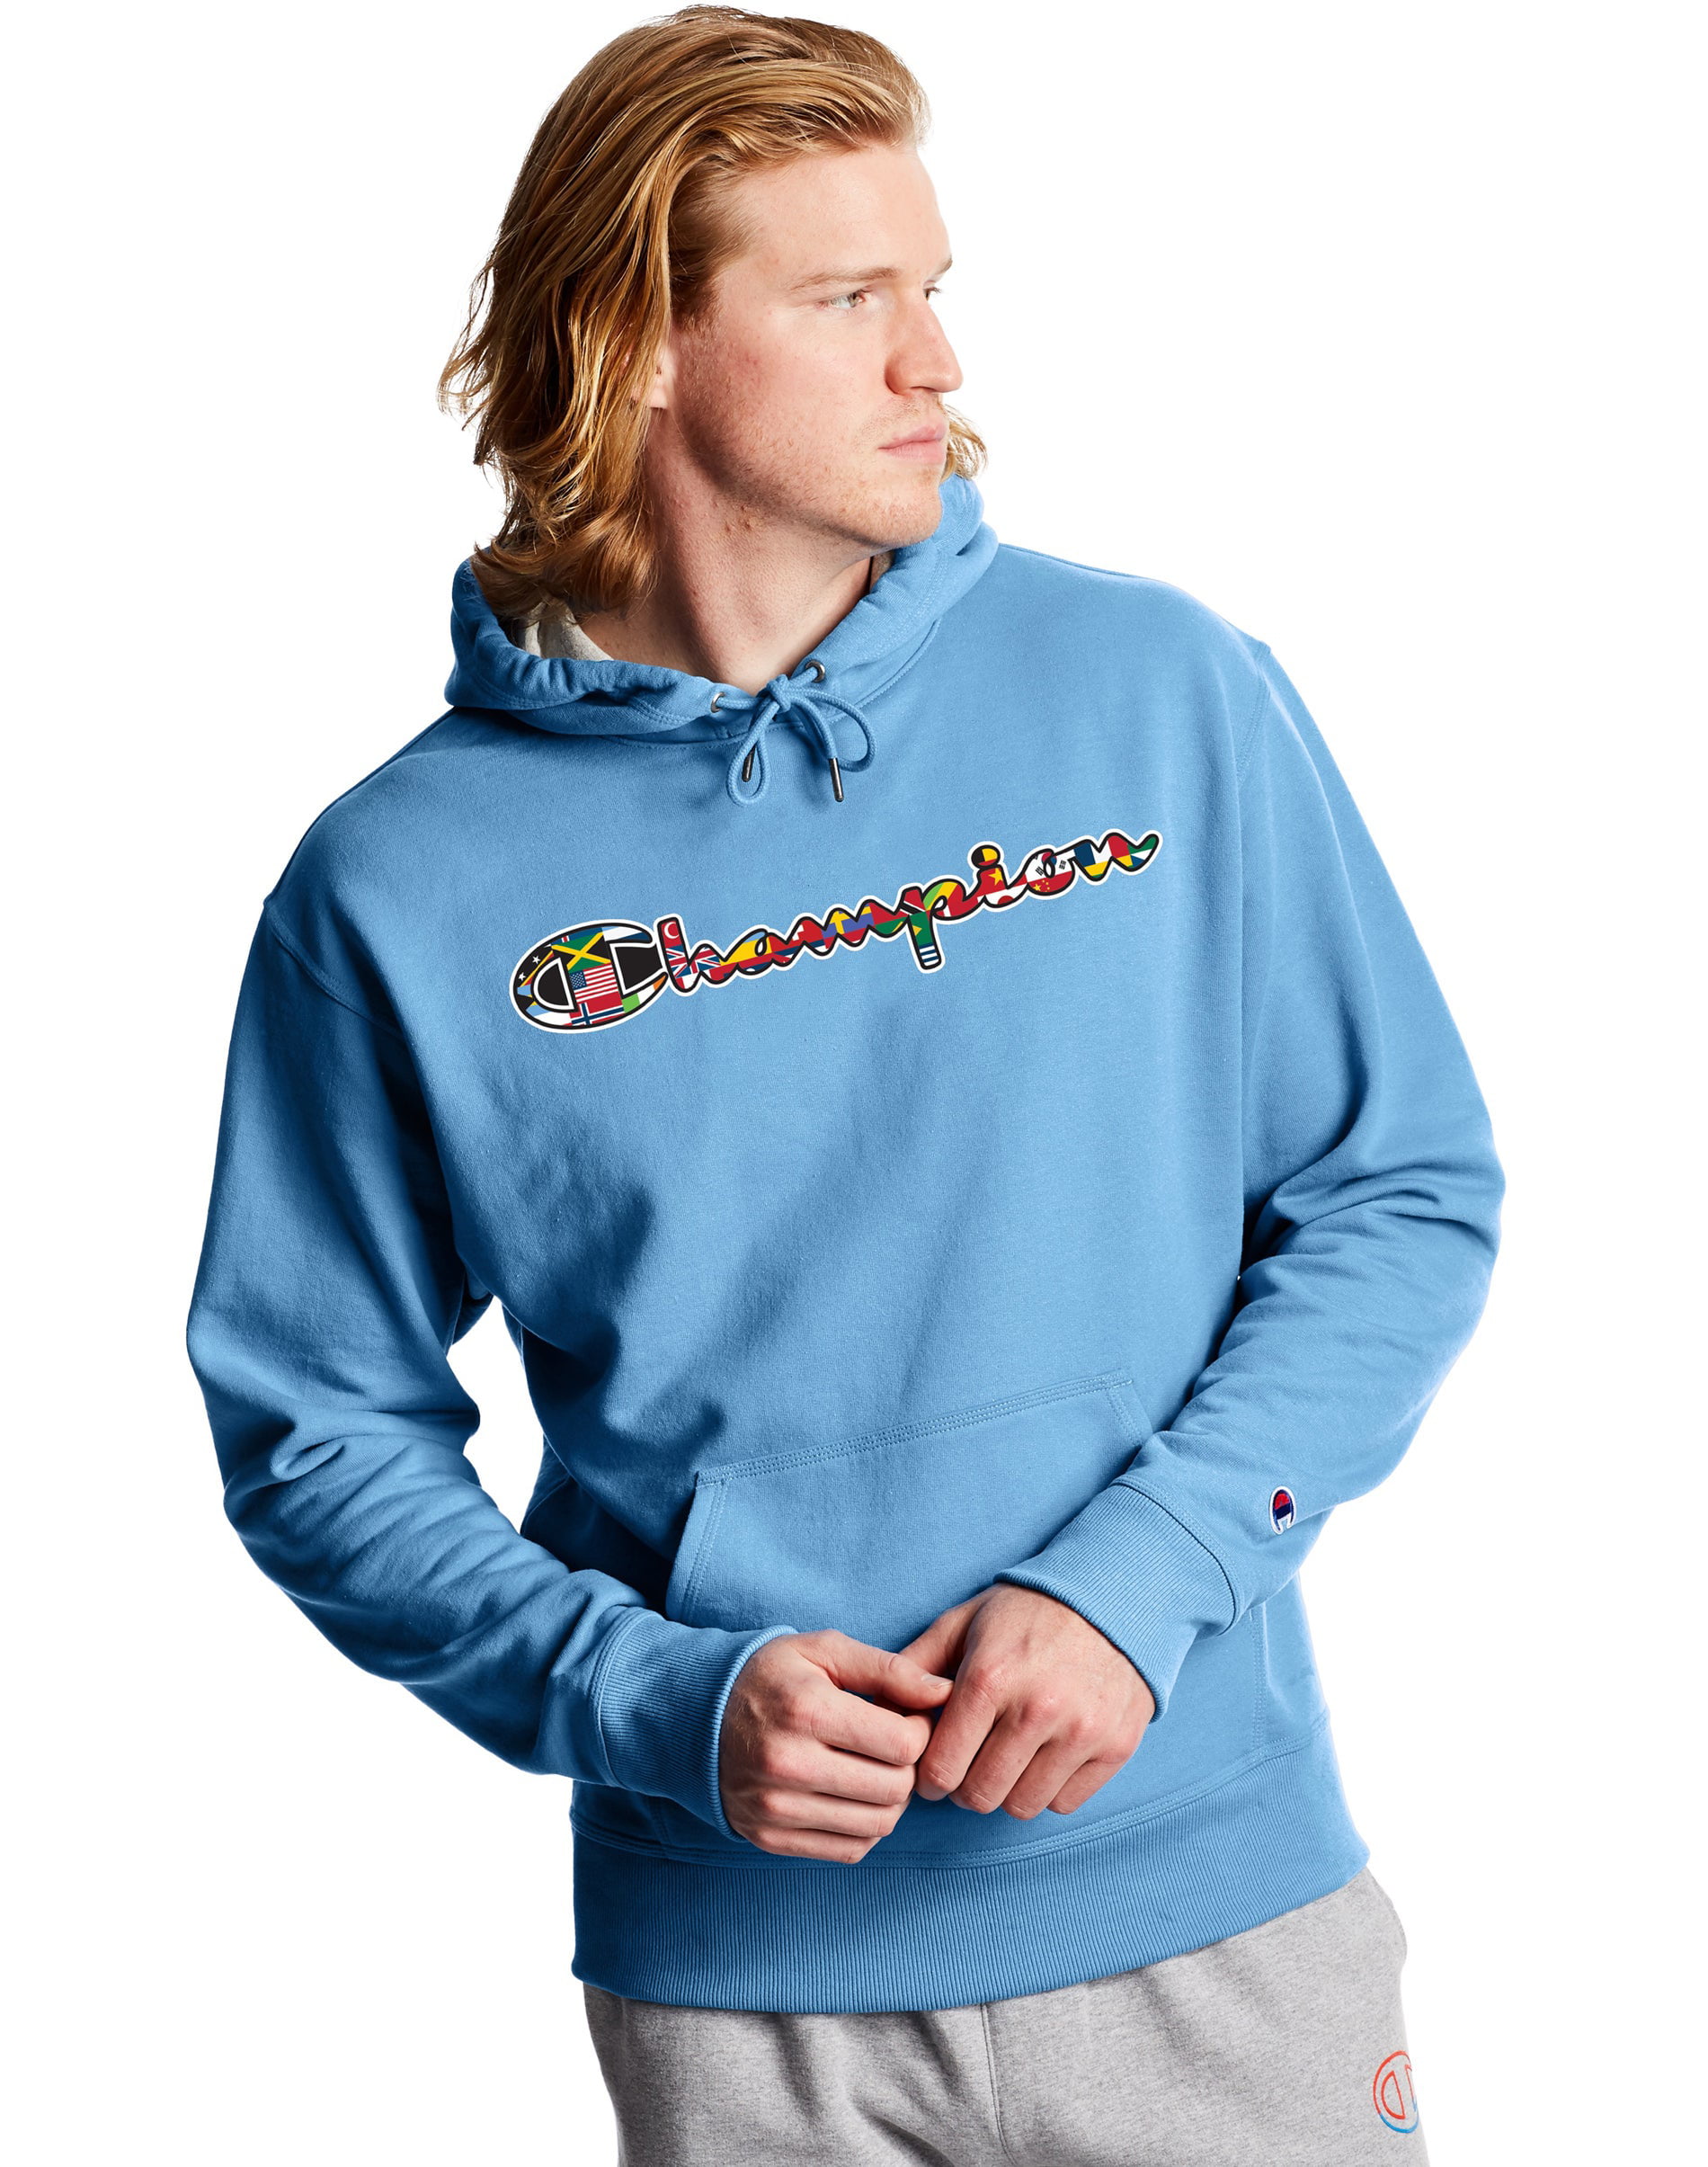 Champion Sweatshirt Champion pullover Sweater Shirt Windbreaker streetwear vintage clothing